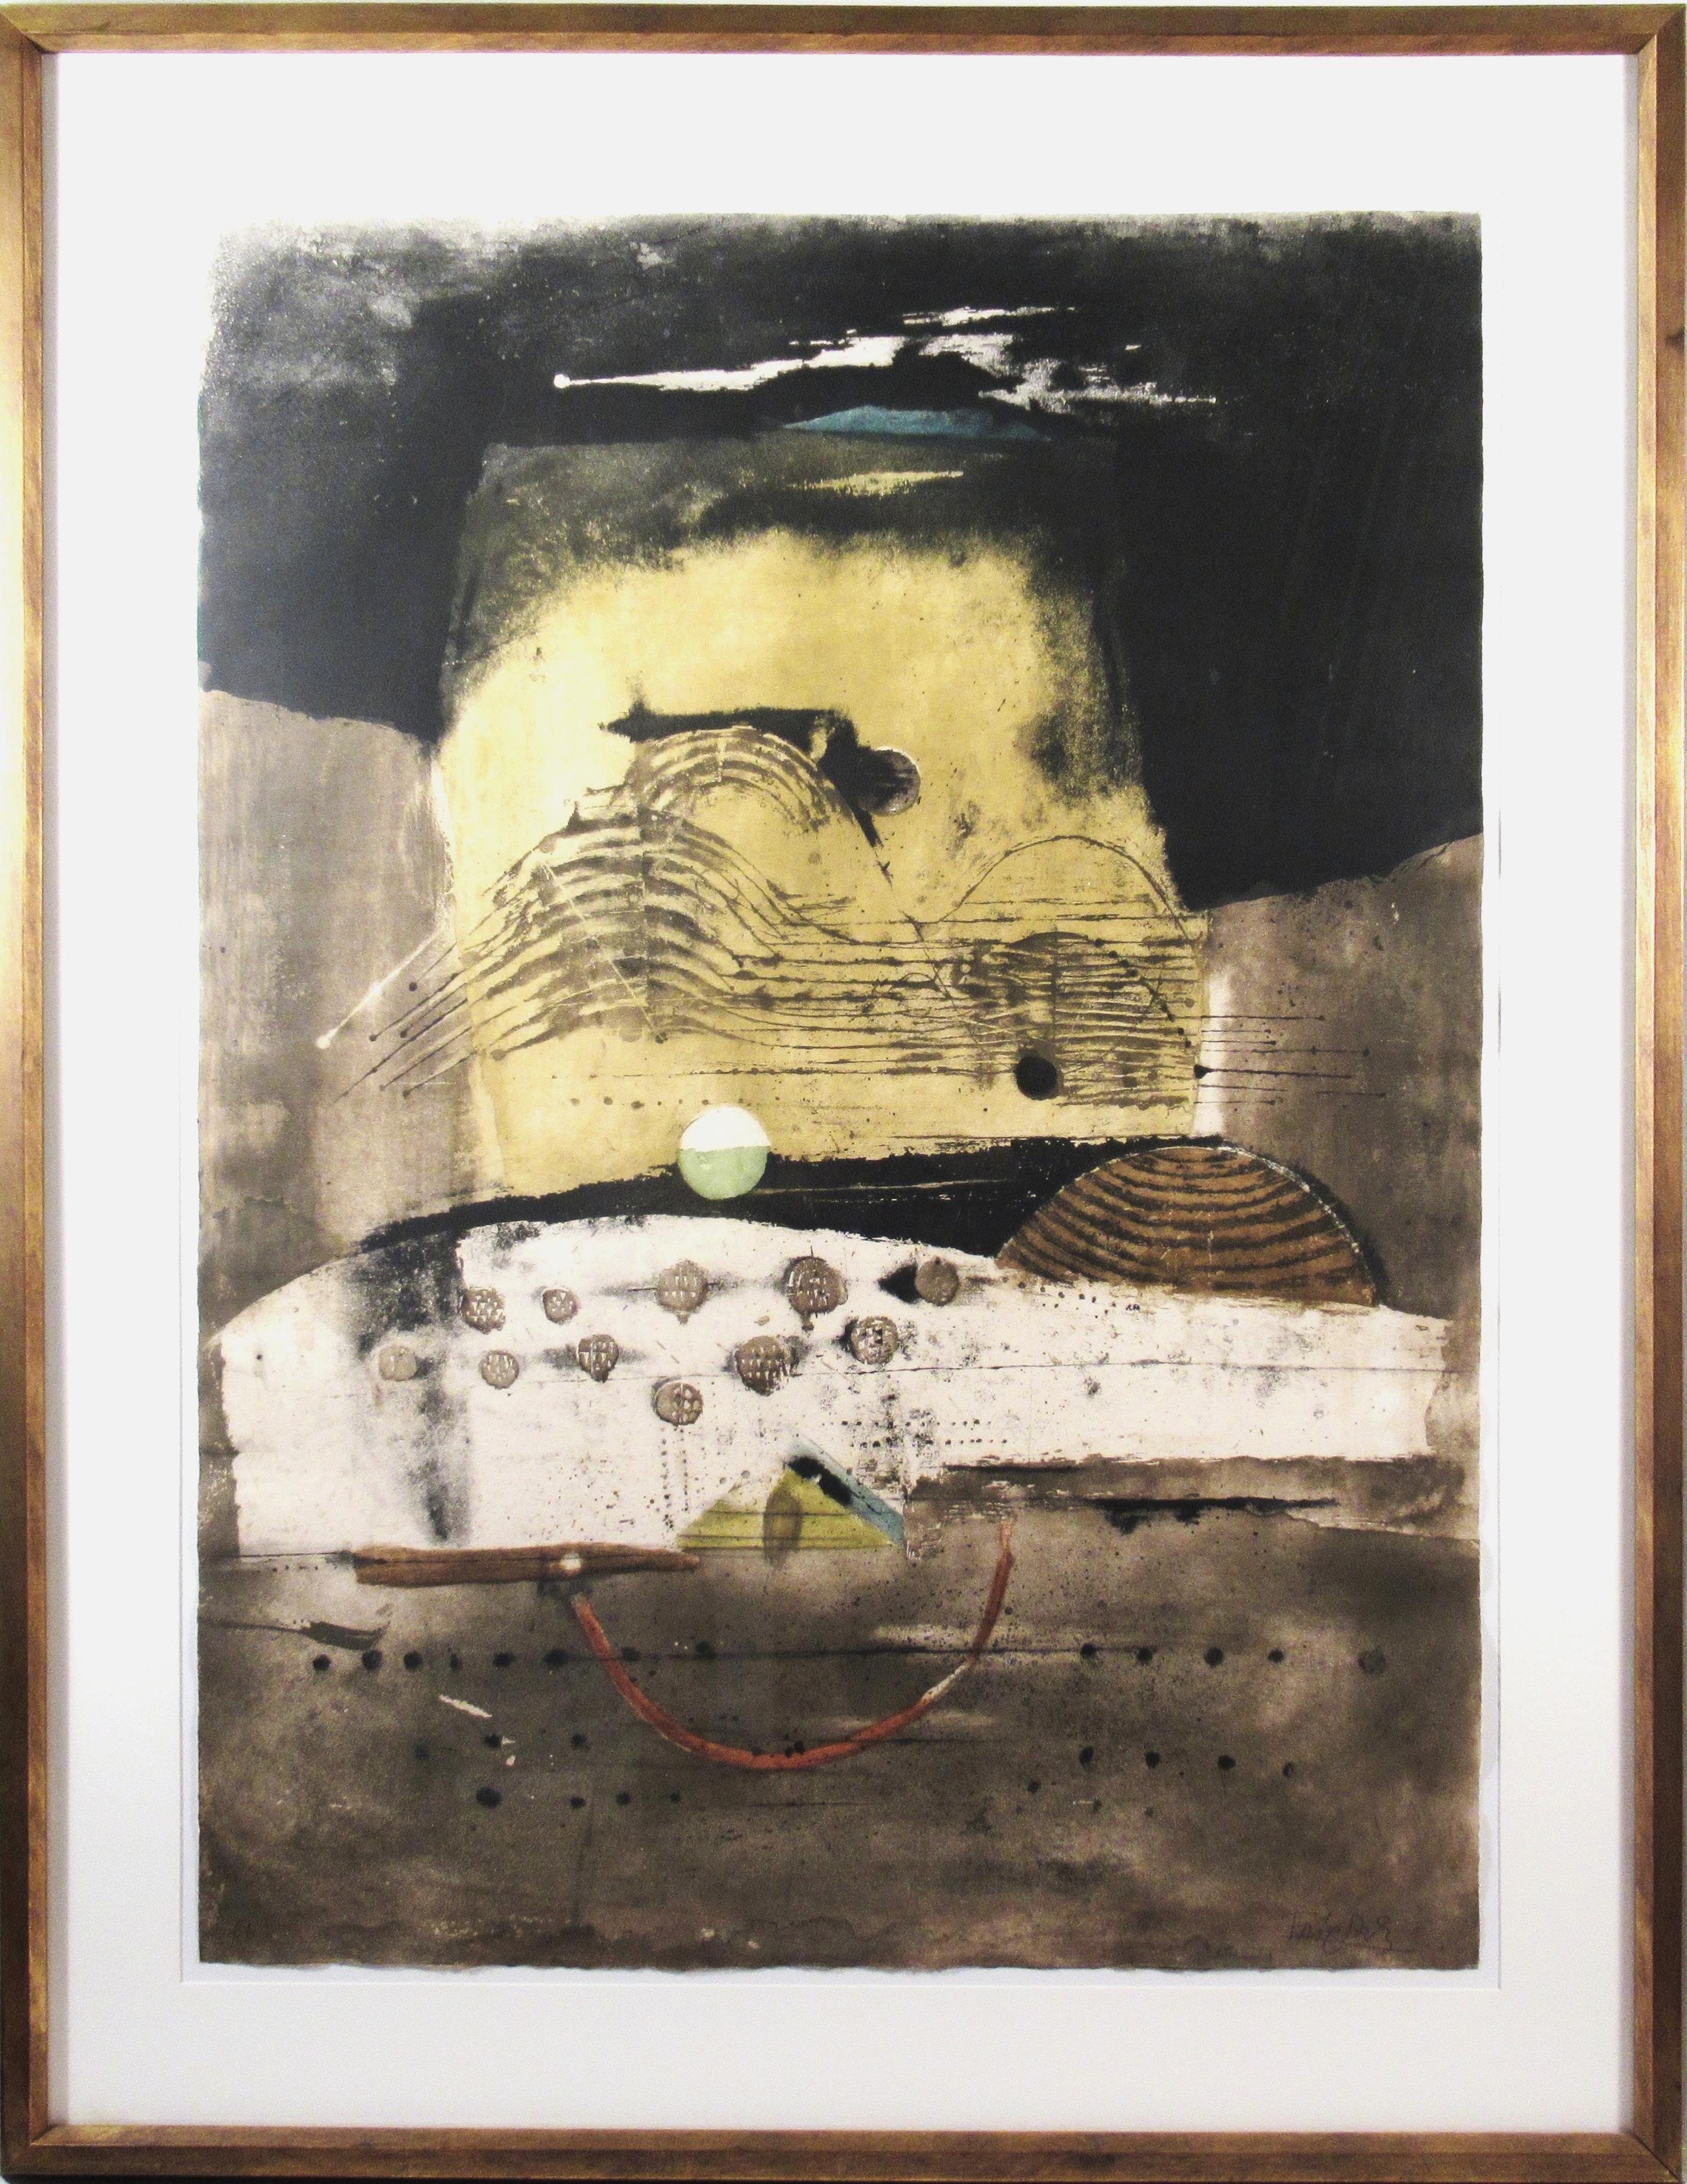 Abstract Print Johnny Friedlaender - "Sombre" - Très grande gravure à l'eau-forte avec aquatinte